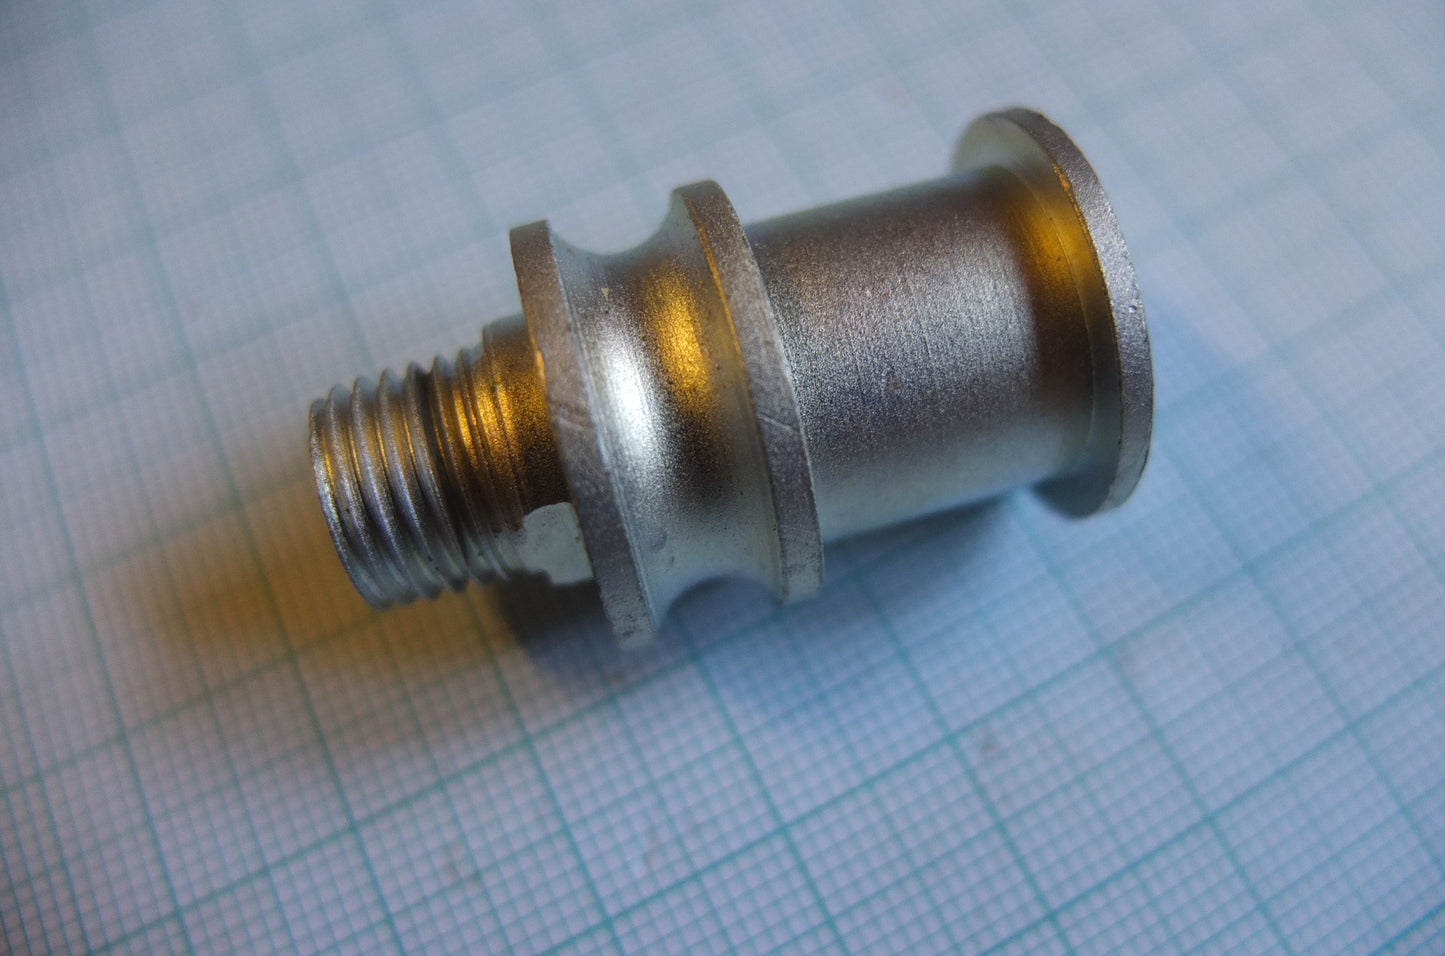 P7A/013 Fulcrum pin S8